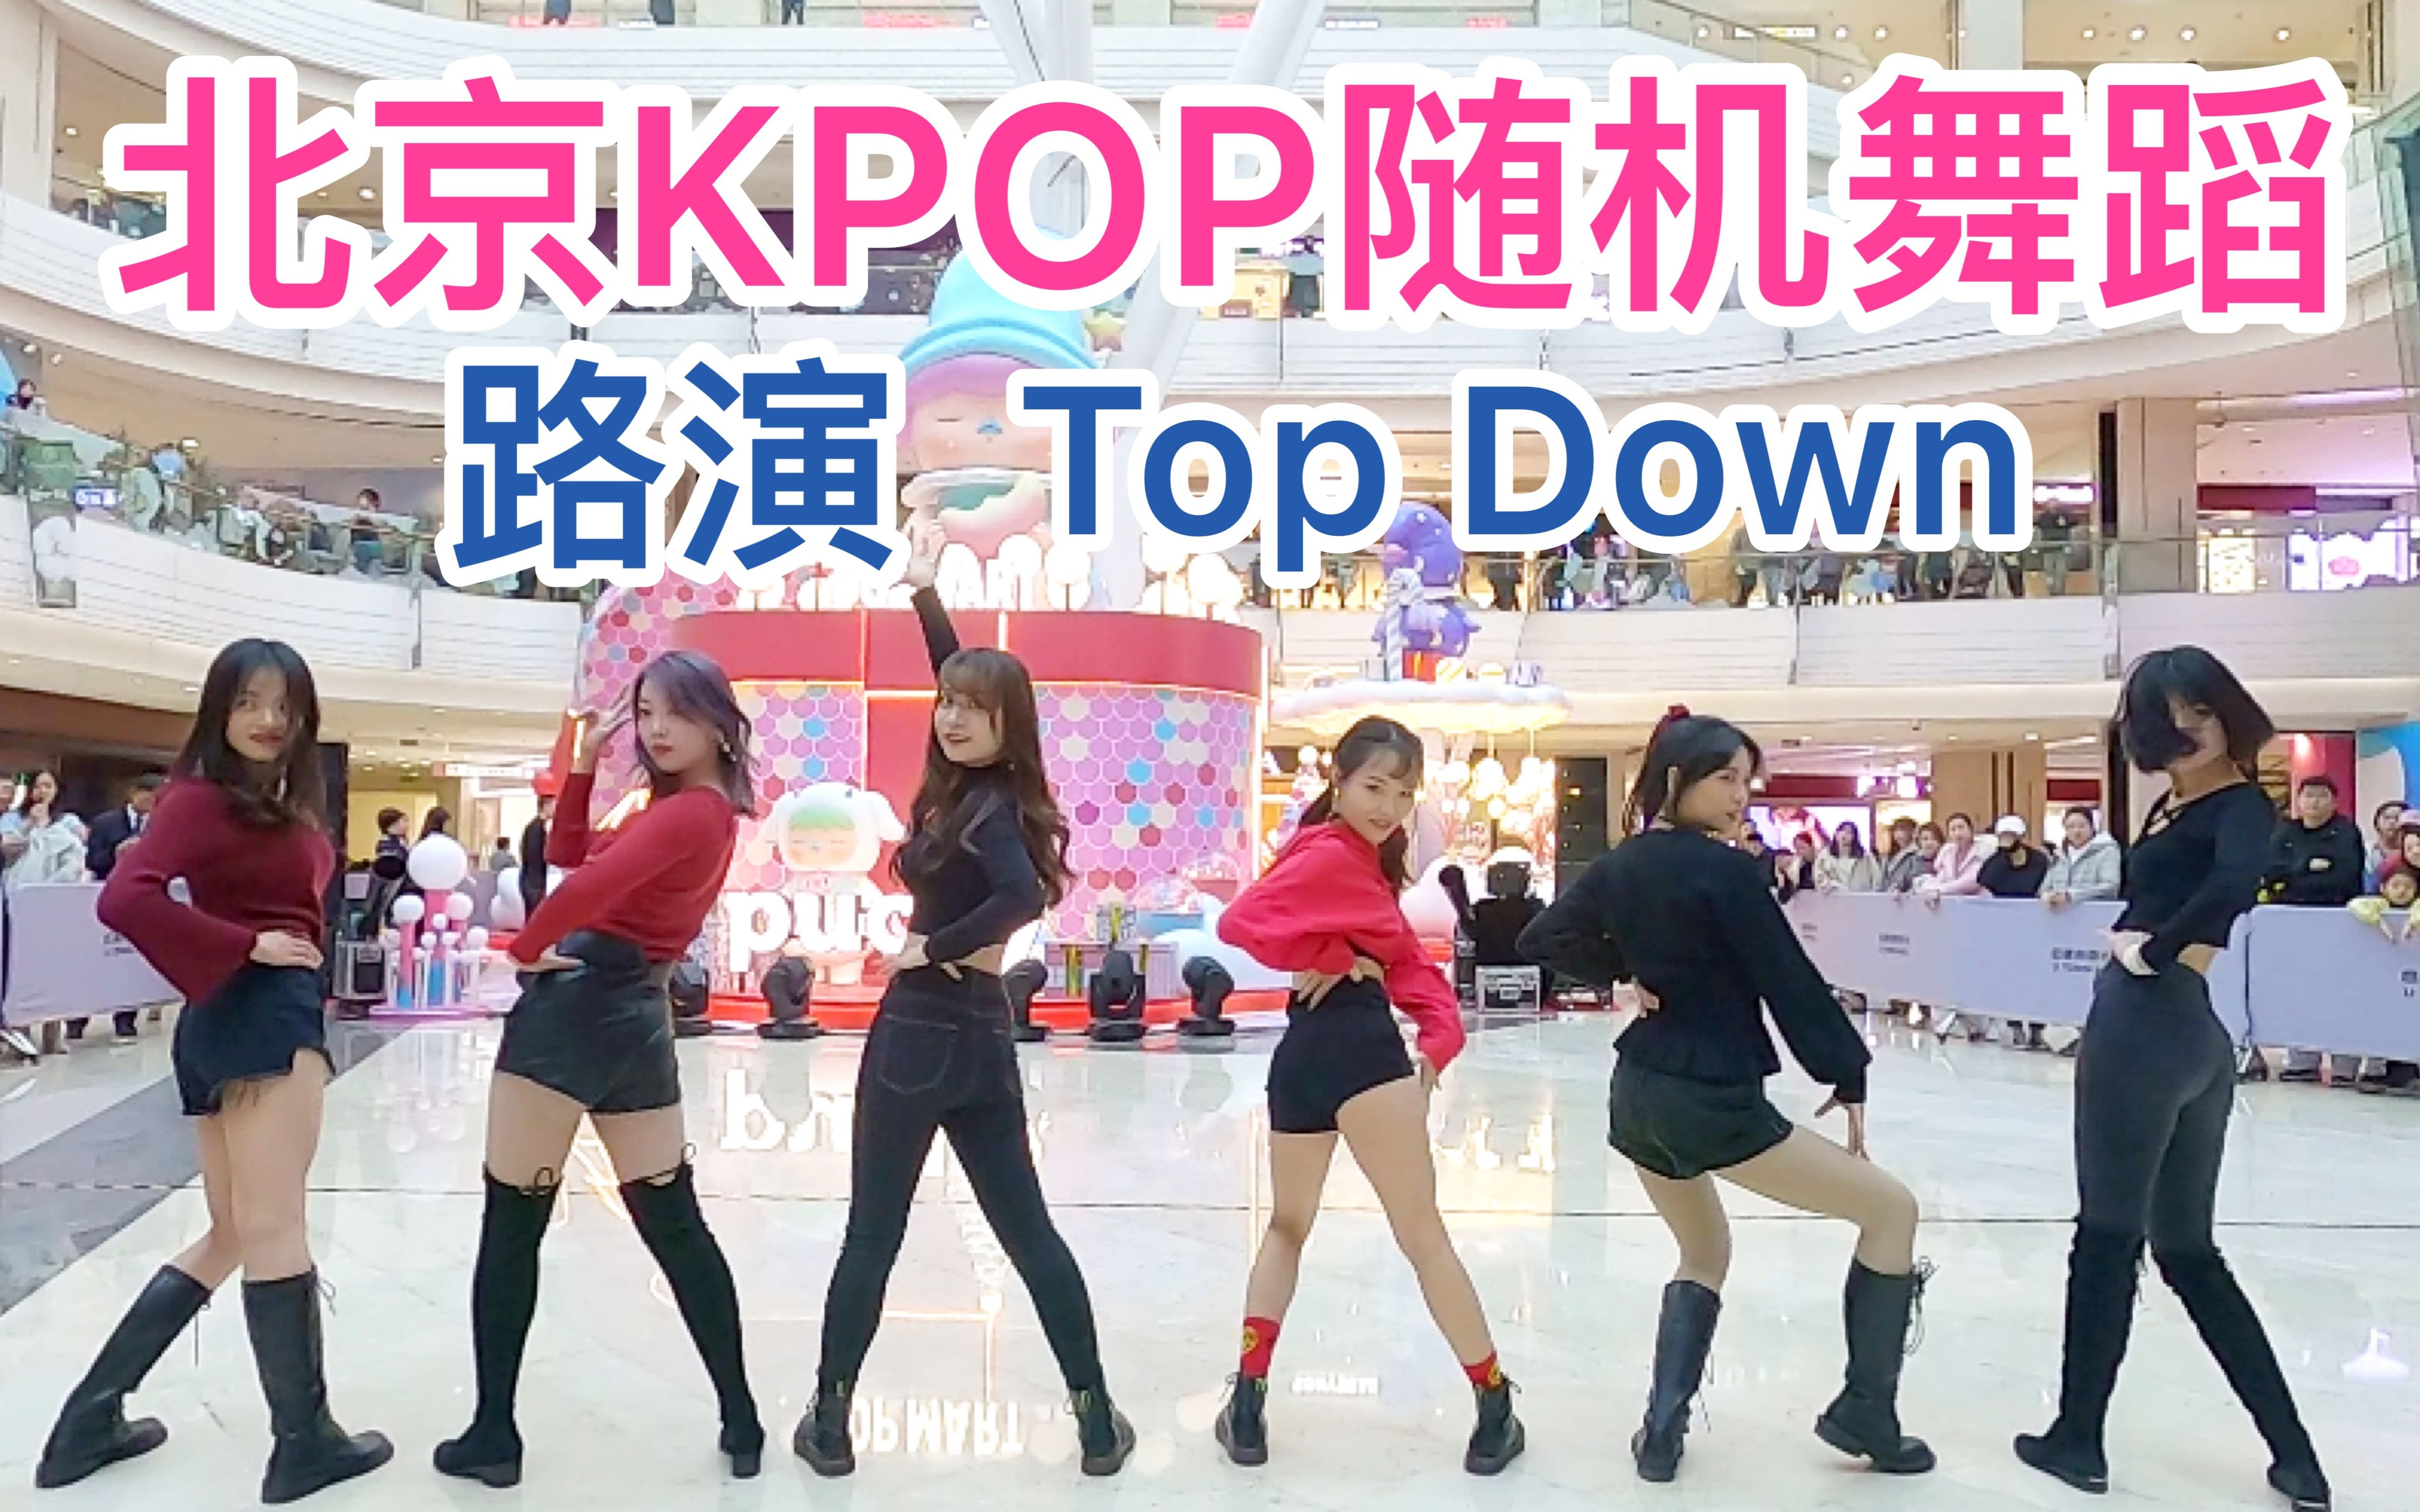 【TheMaze】北京KPOP随机舞蹈2019.12.14-路演《TOP DOWN》小姐姐们超帅气～ 随放随跳